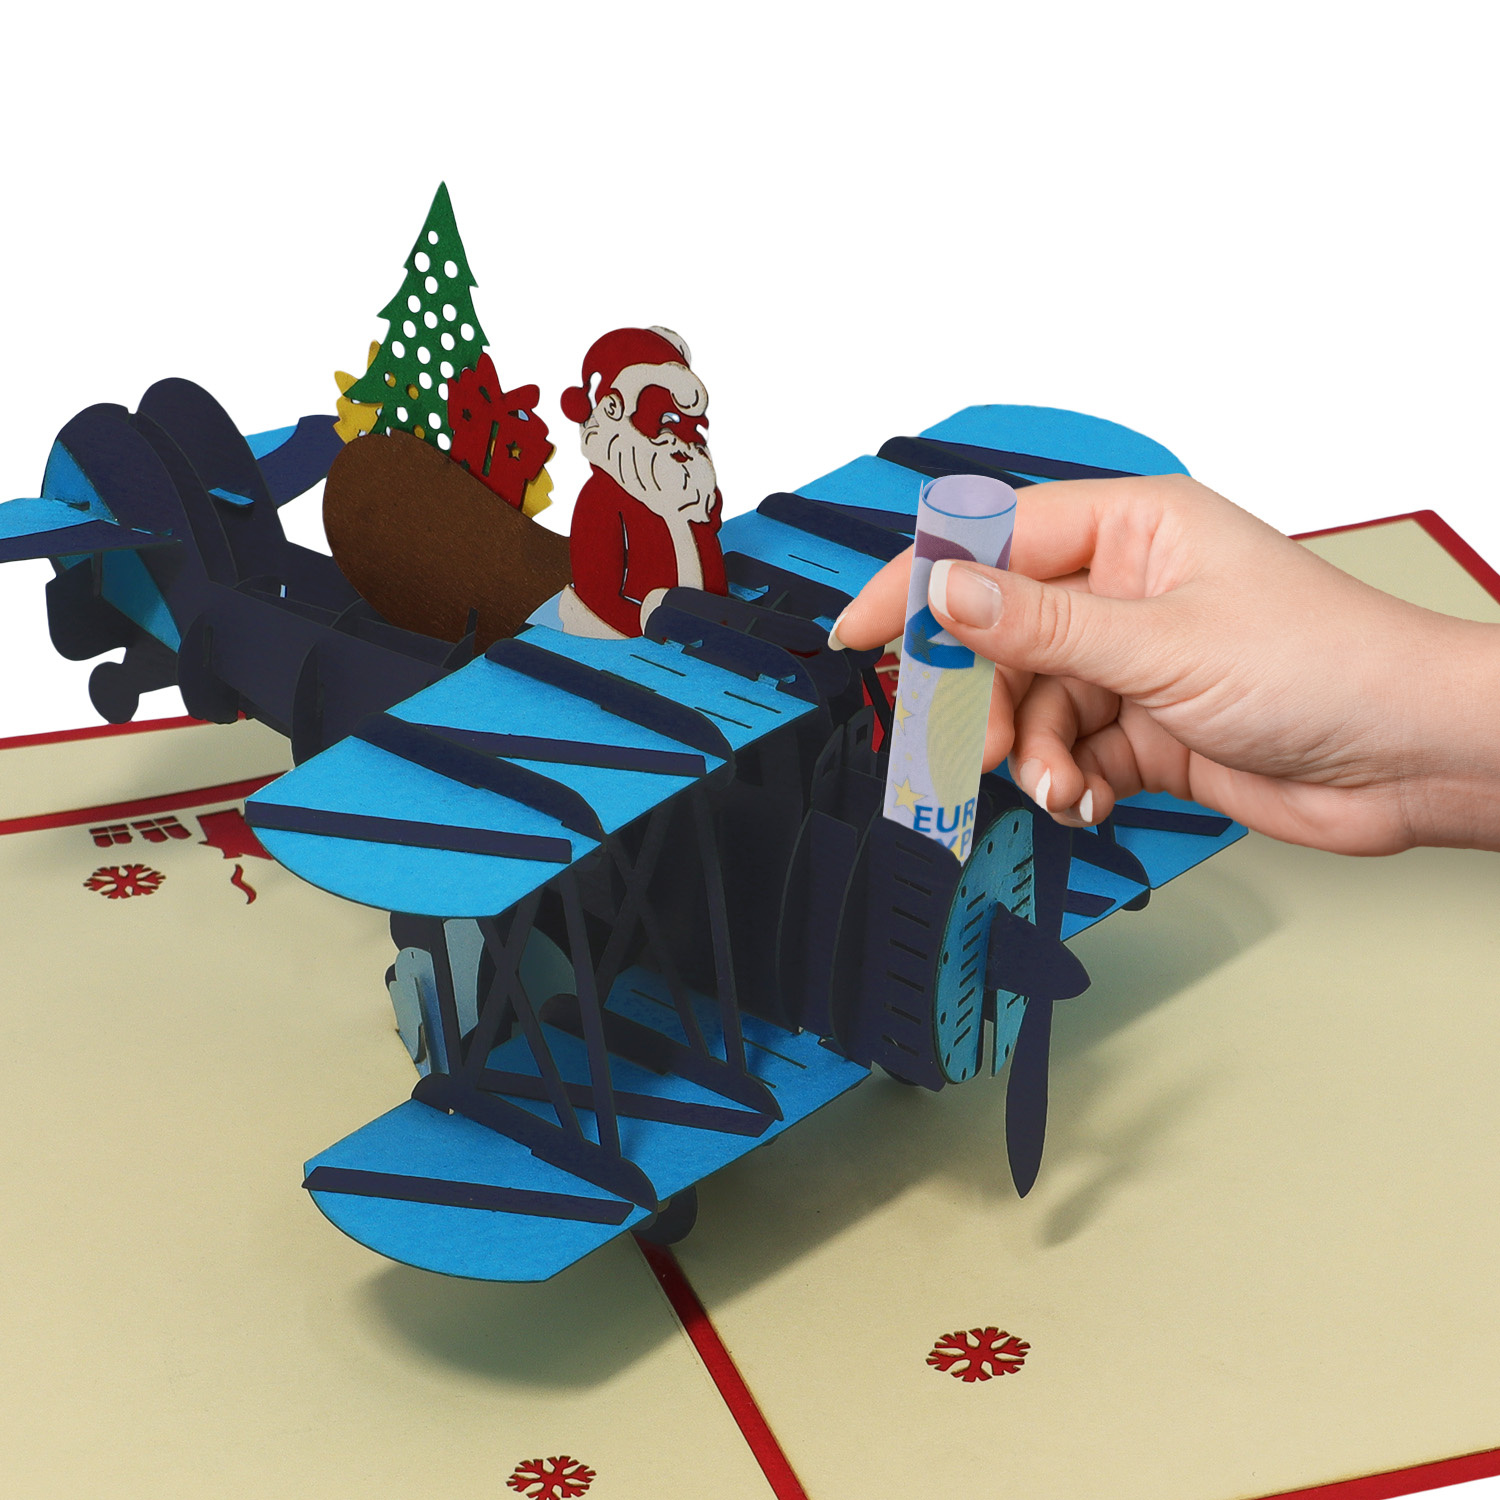 LINPOPUP 3D Pop Up Card, Christmas card, Holidays, Season Greetings, Santa Claus in Double Decker Airplane, LIN17660, LINPopUp®, N455